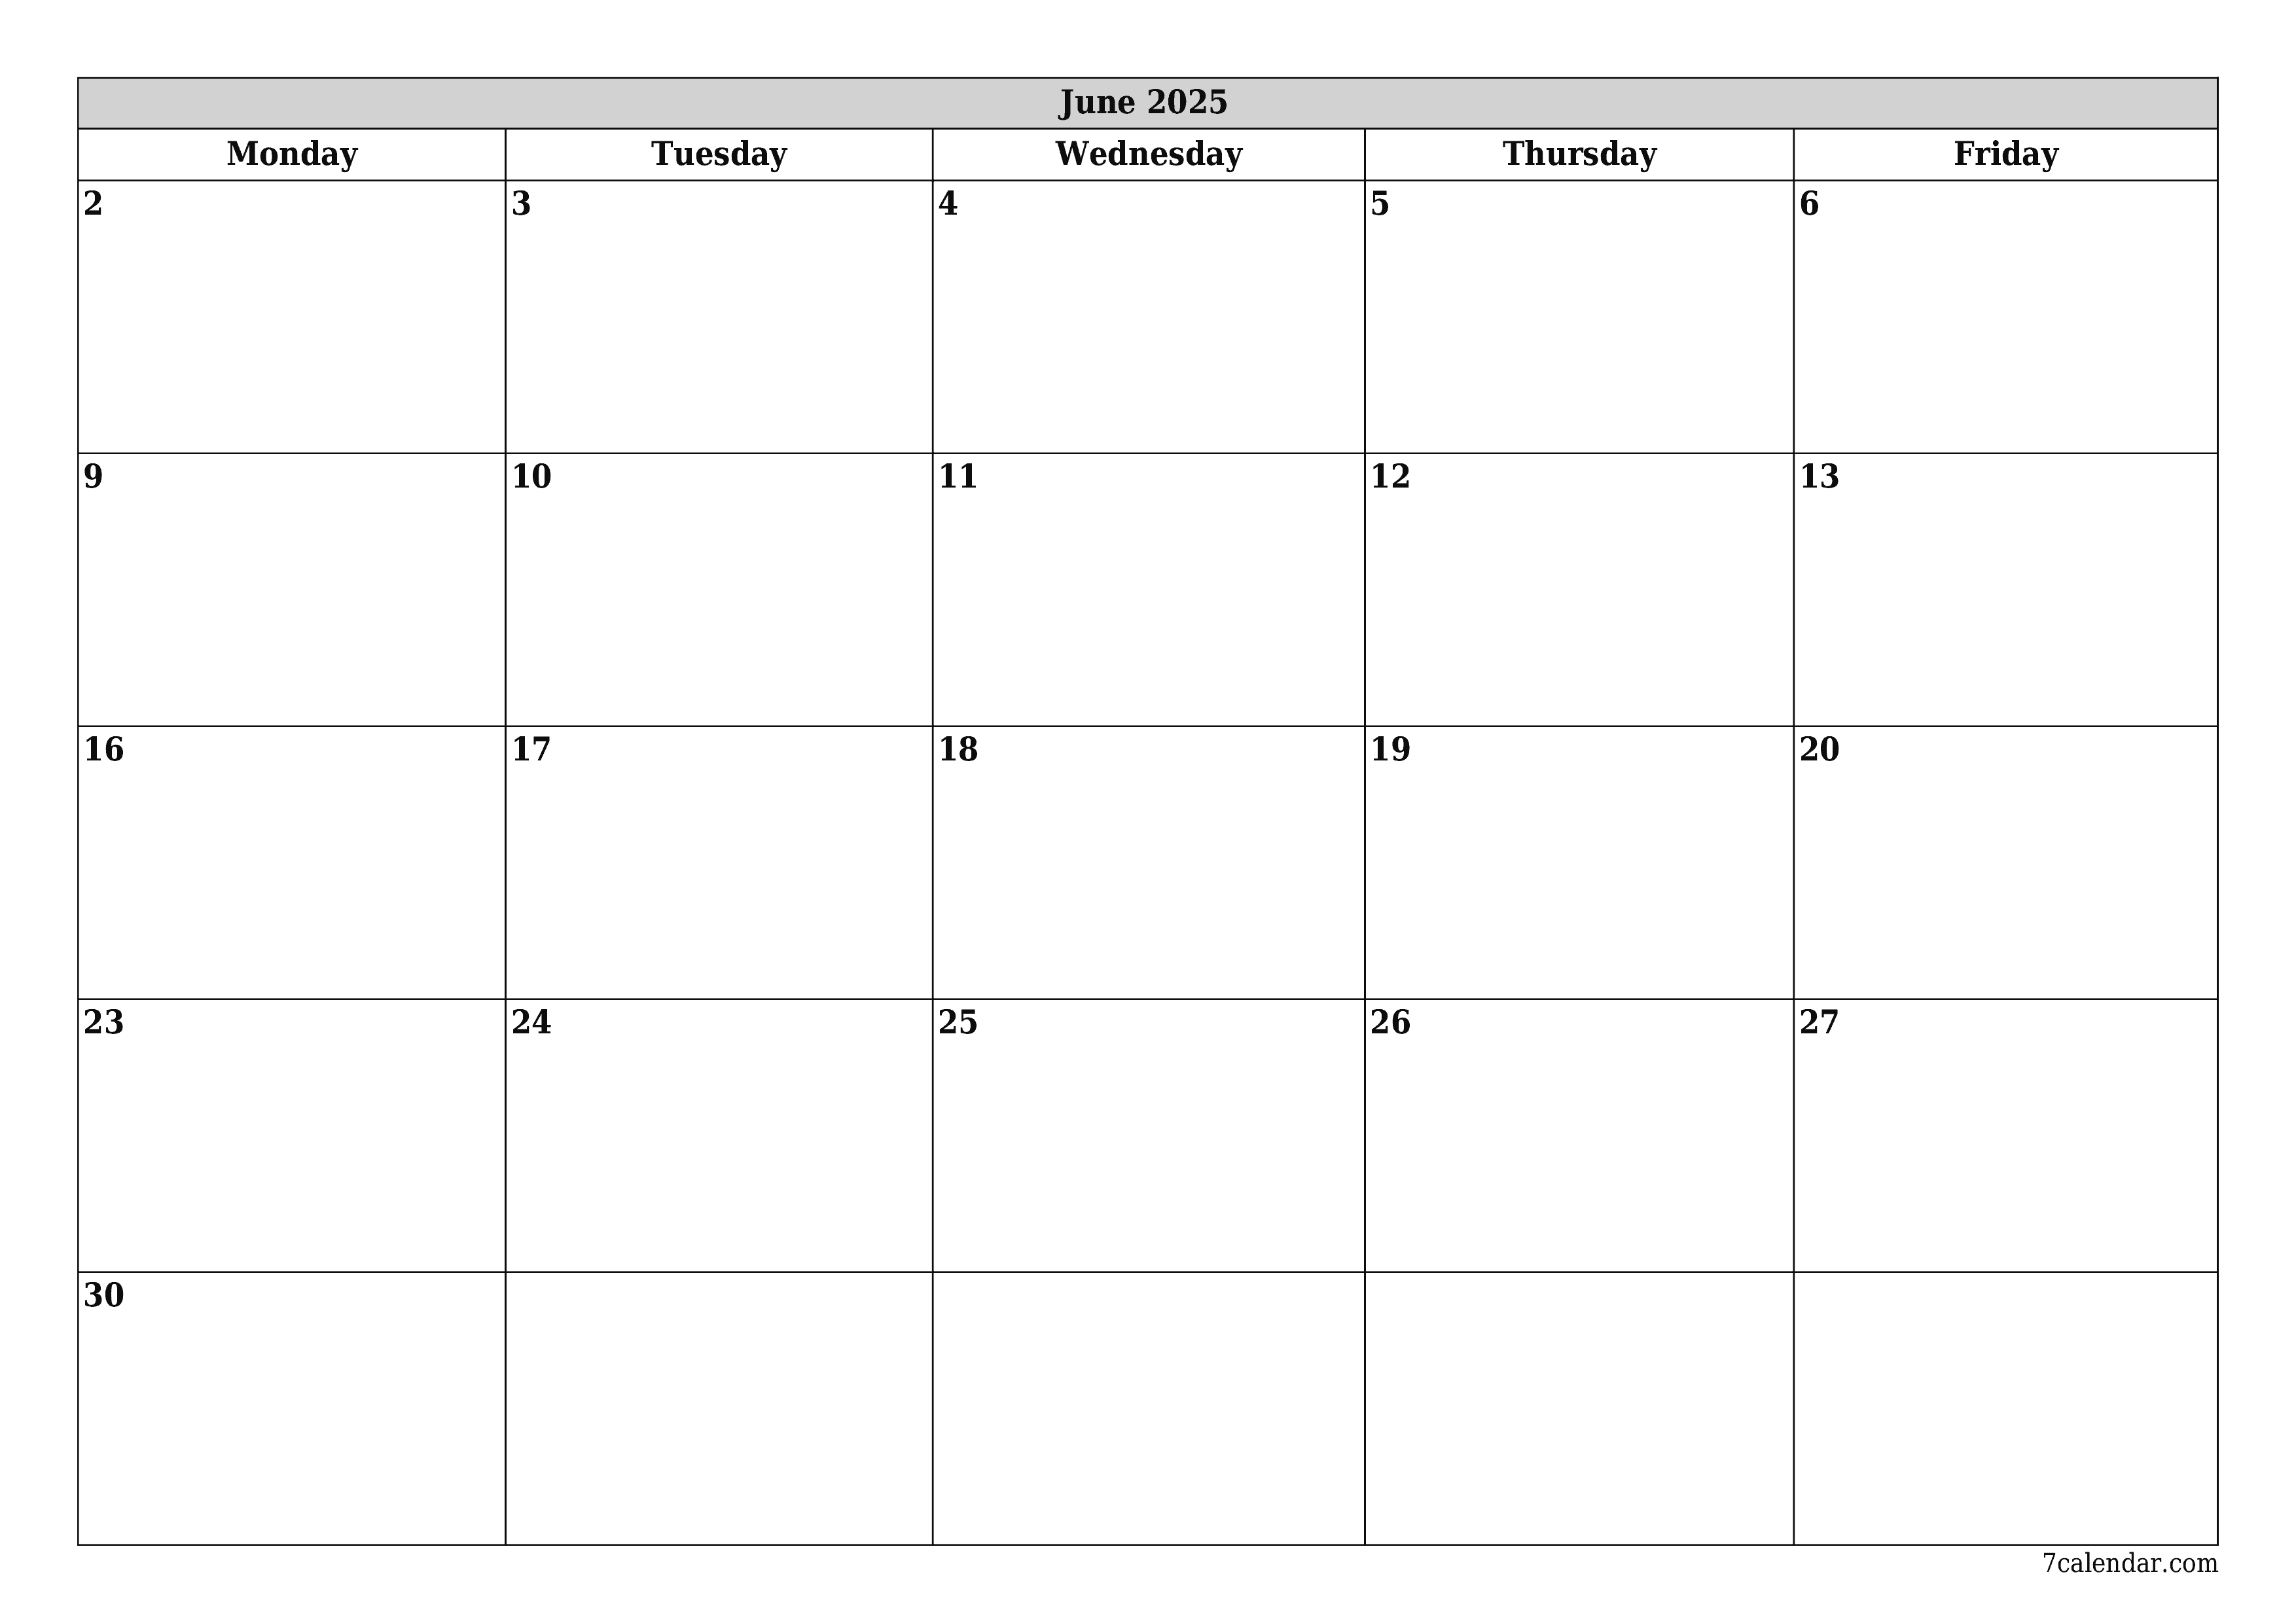 Blank calendar June 2025